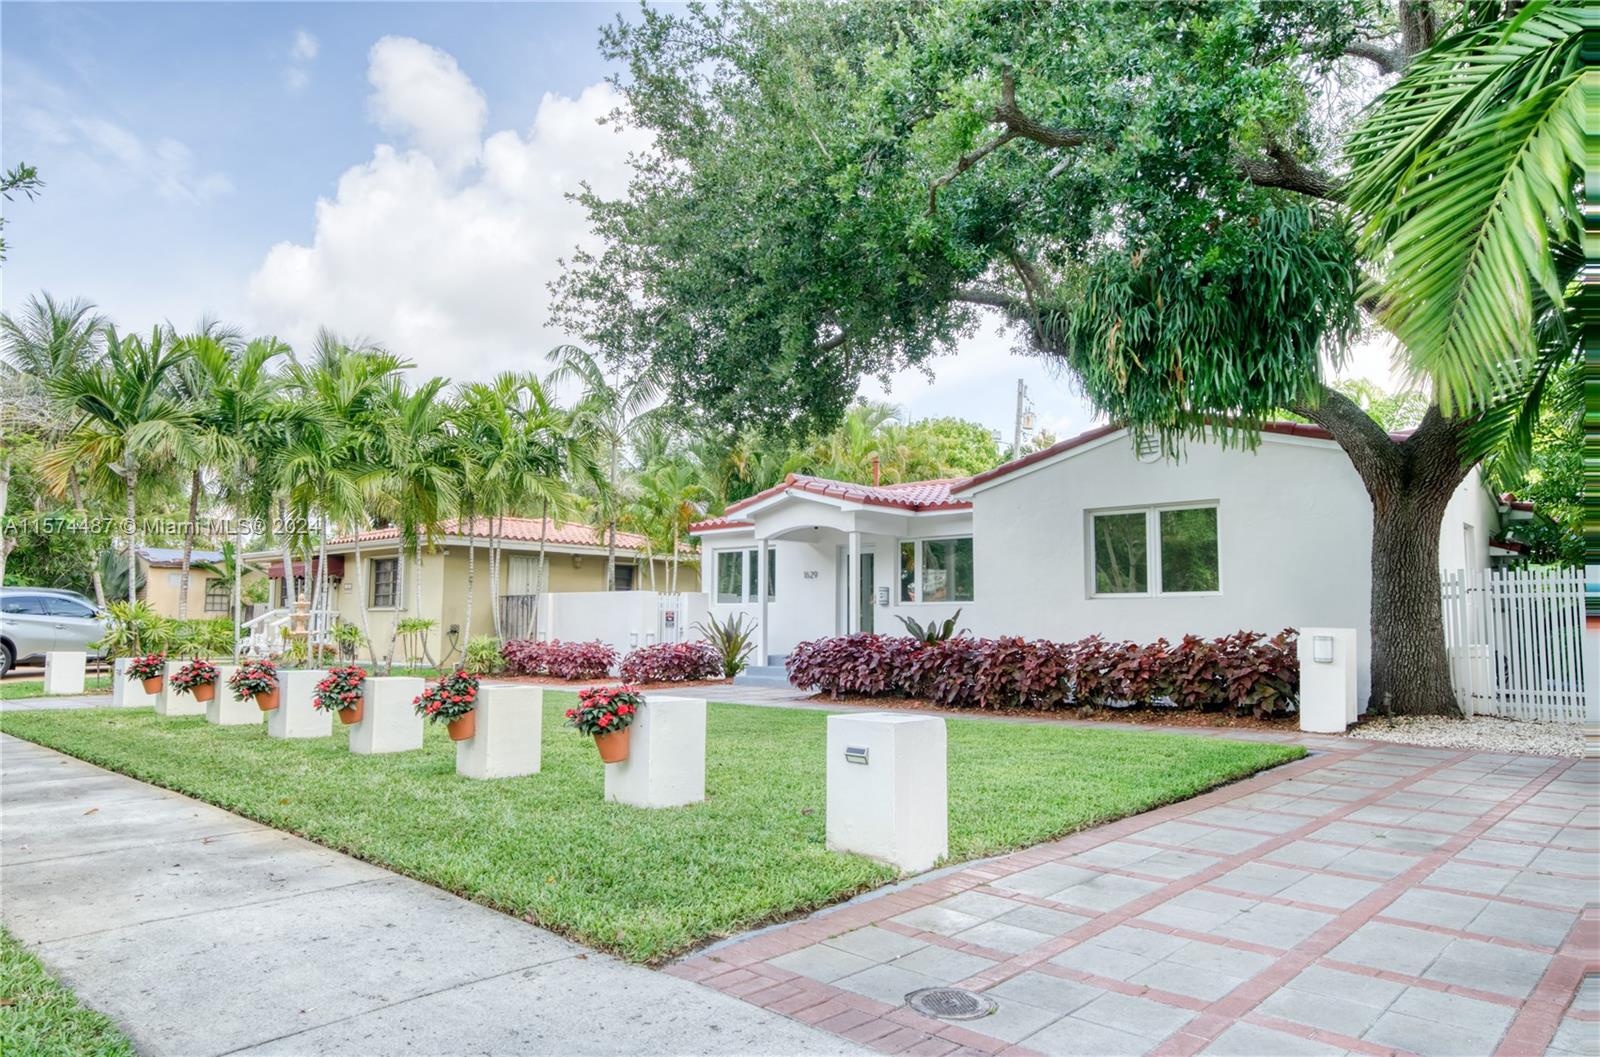 Property for Sale at 1629 Westward Dr, Miami Springs, Miami-Dade County, Florida - Bedrooms: 3 
Bathrooms: 2  - $861,000